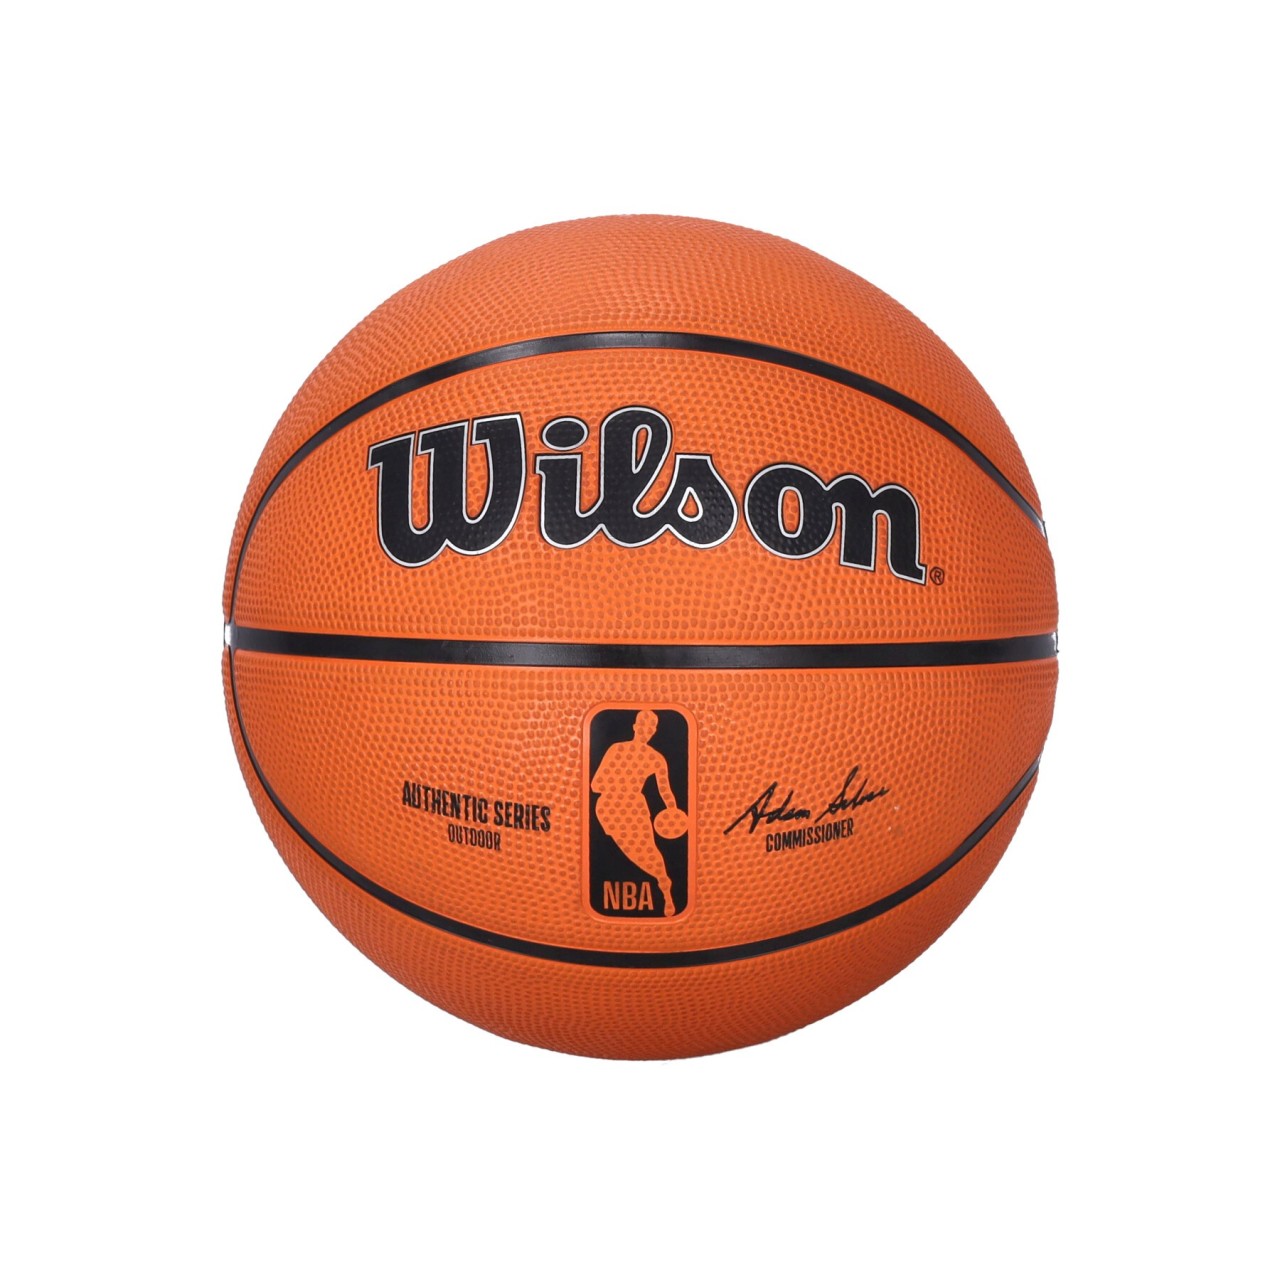 WILSON TEAM NBA AUTHENTIC SERIES OUTDOOR BASKETBALL SIZE 7 WTB7300XB07